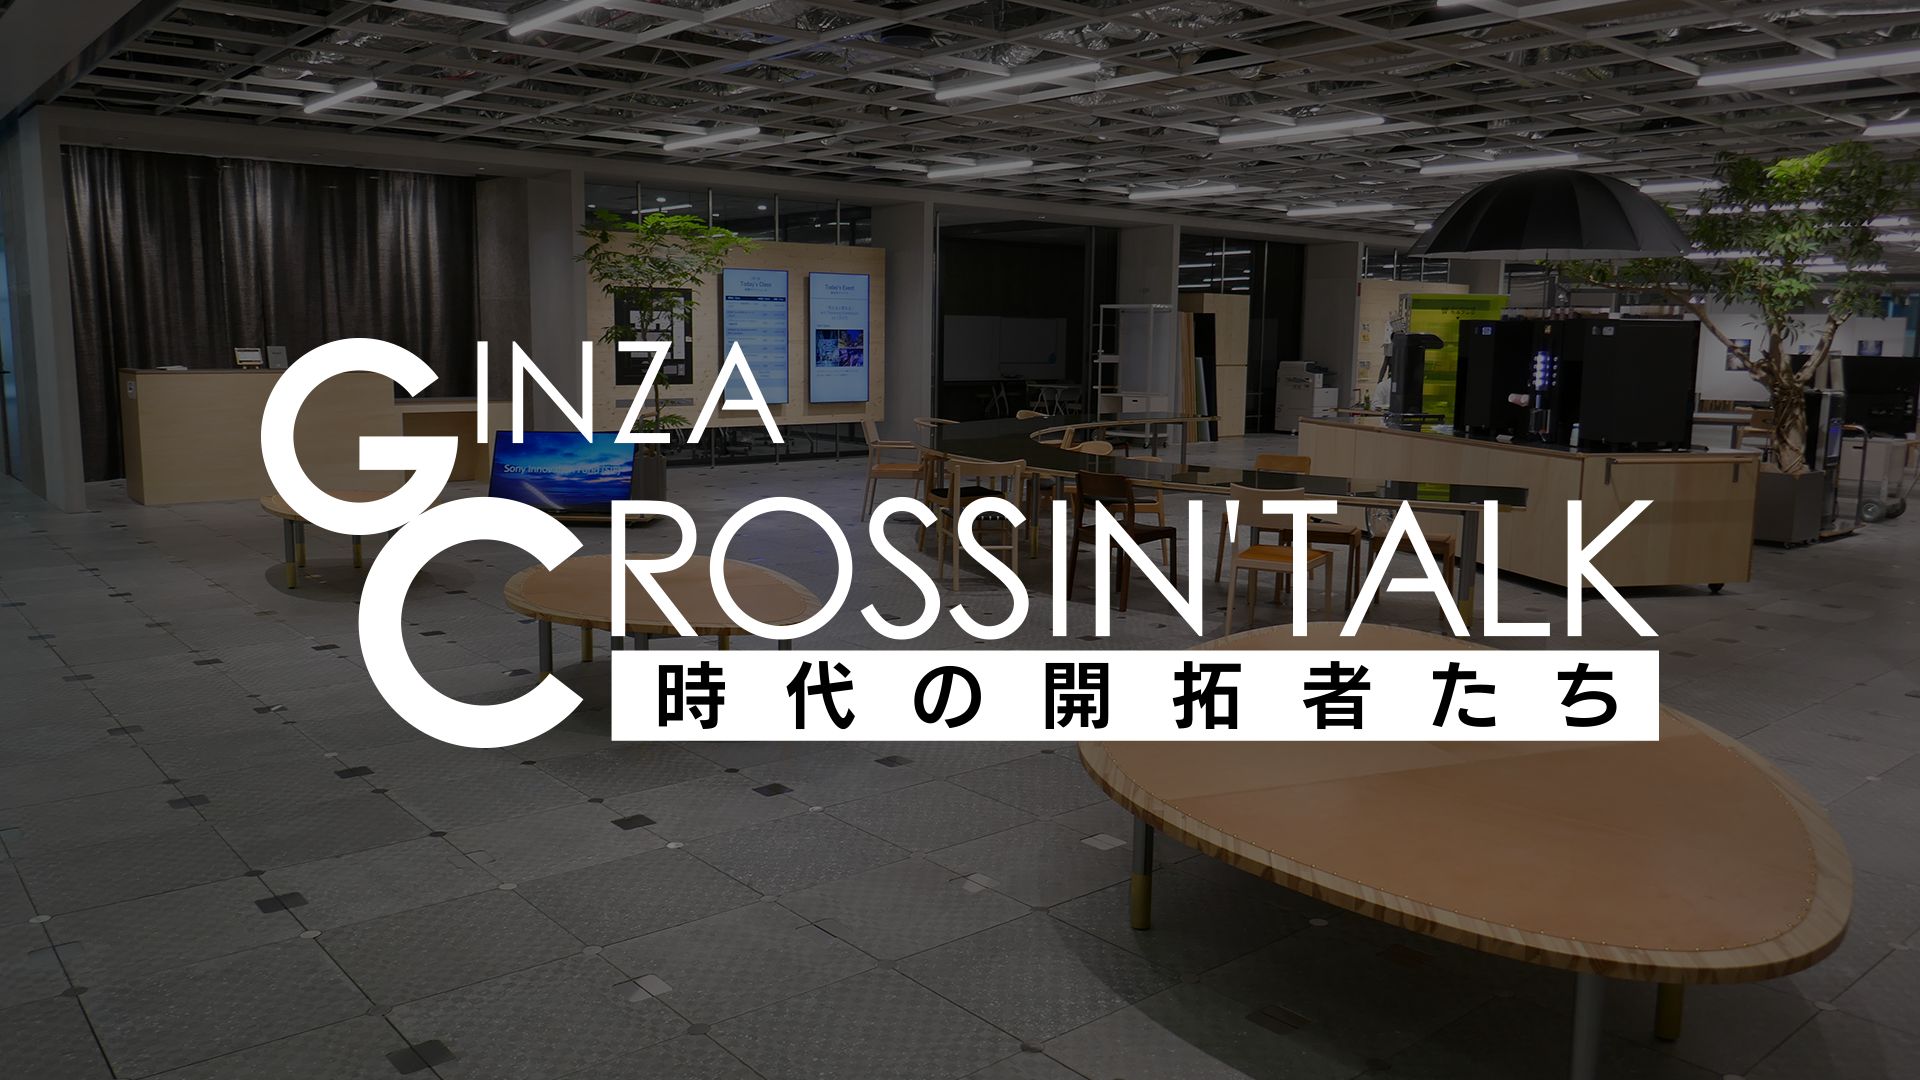 GINZA CROSSING Talk 〜時代の開拓者たち〜